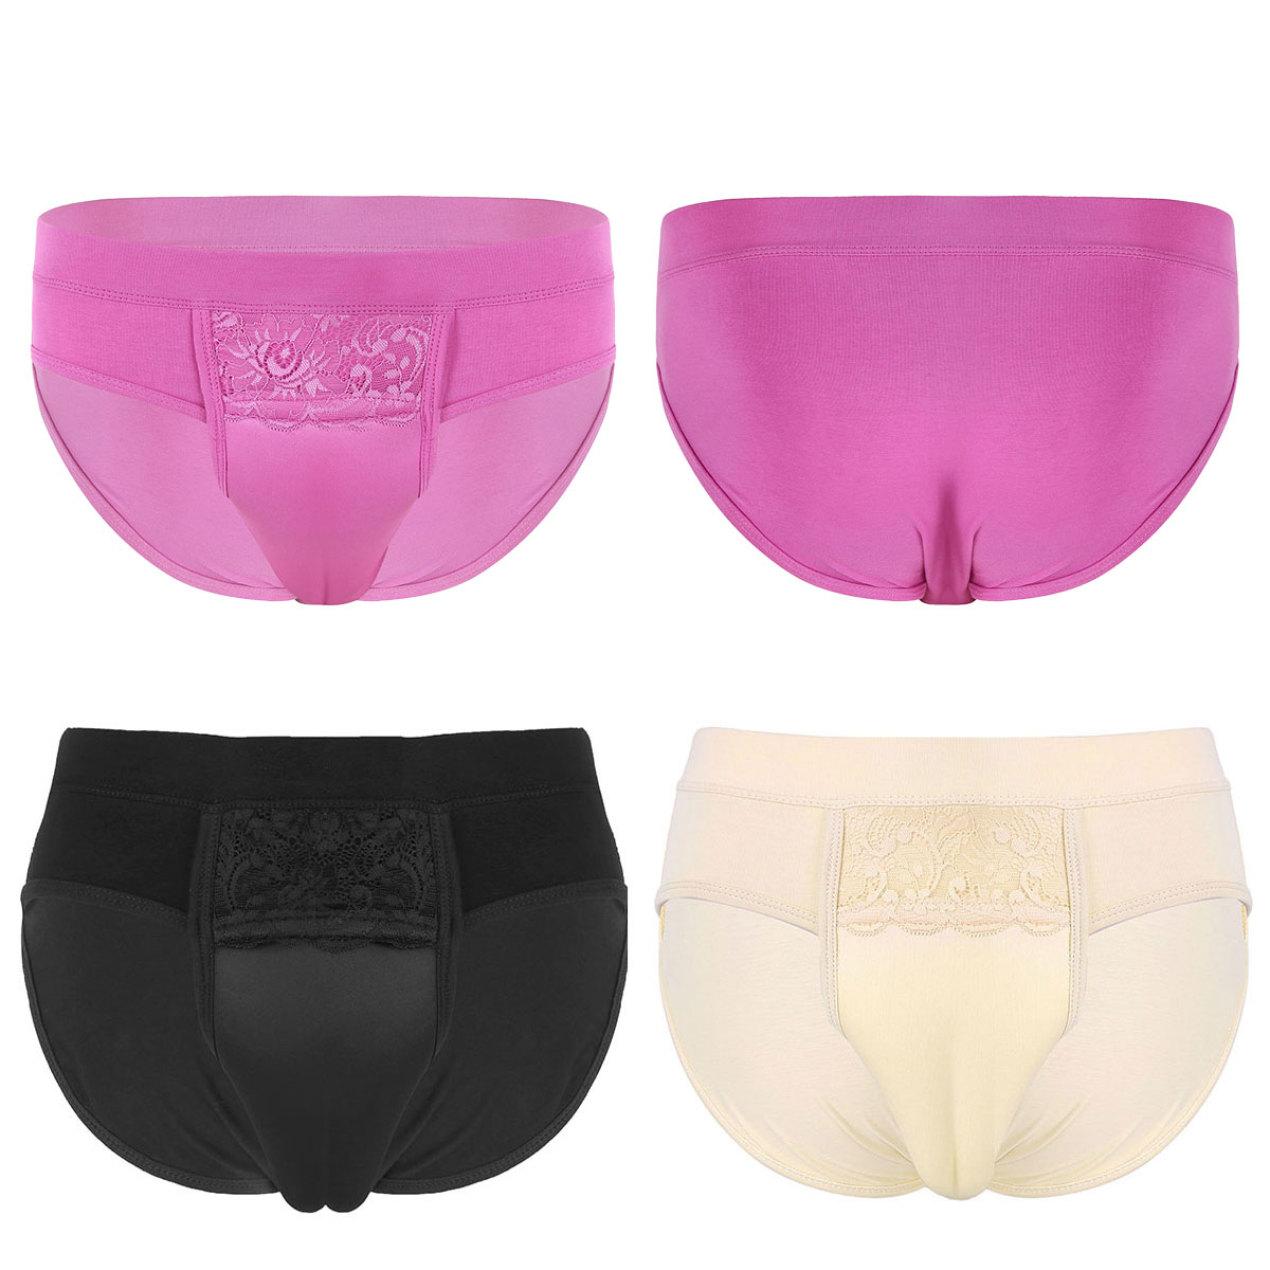 iEFiEL Men's Shaping Briefs Underwear Hiding Gaff Panties Cotton Lingerie for Crossdresser Halloween Costume